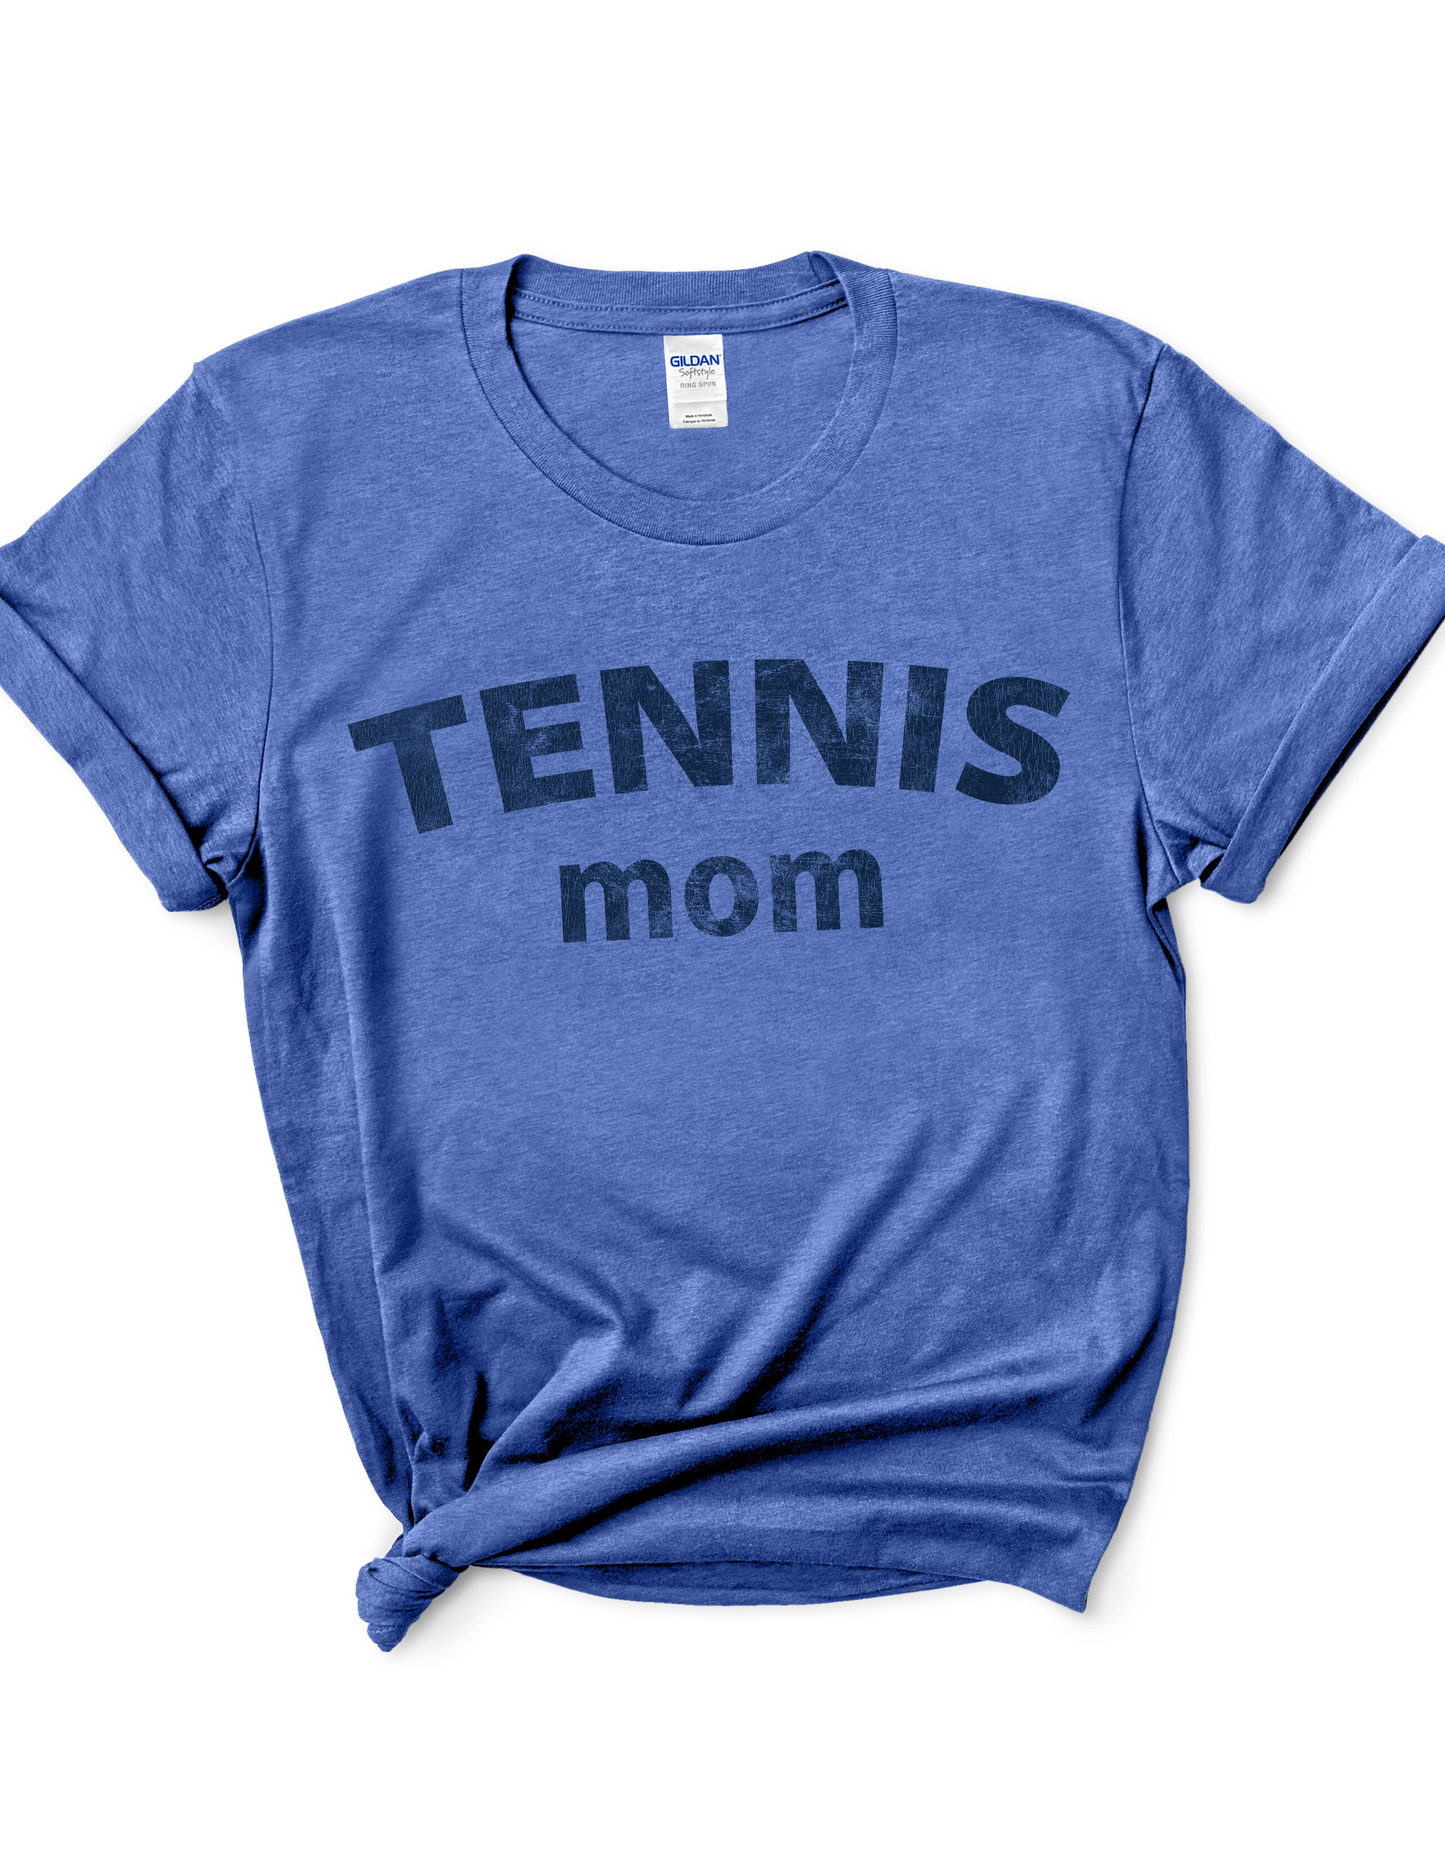 Mom Era - Tennis